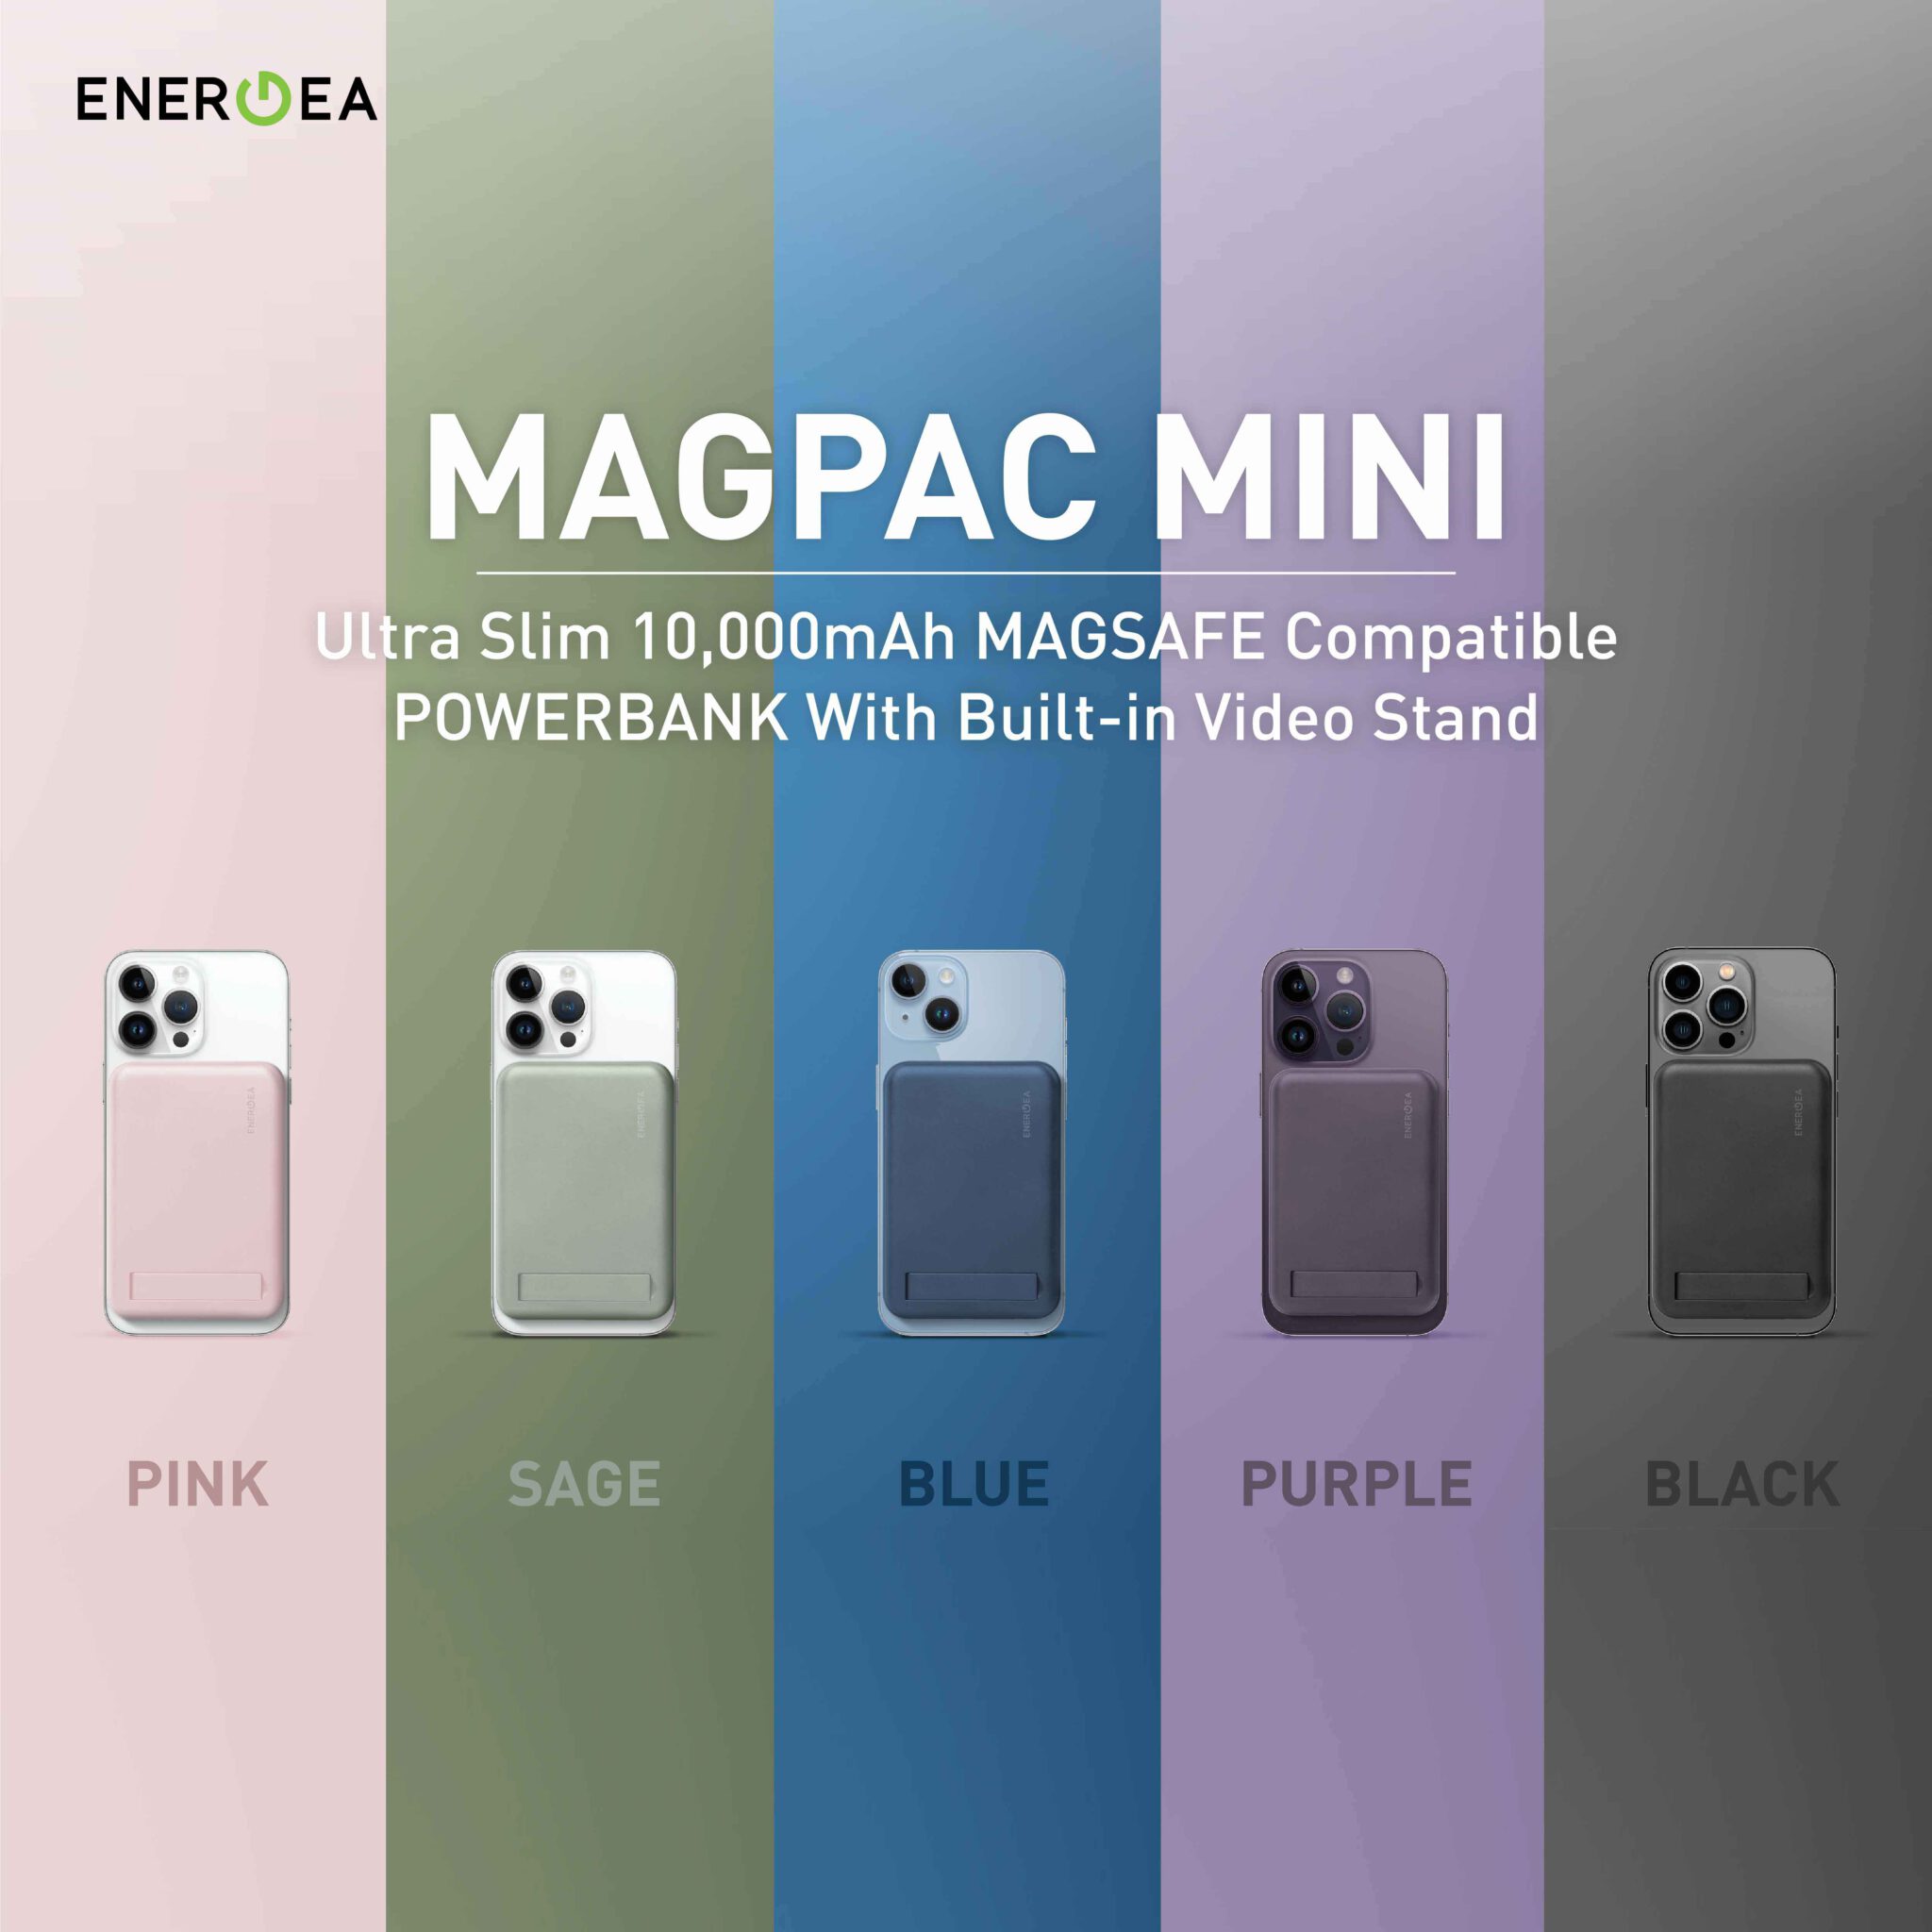 ComPac Mini 2 - Pic Magpac Mini 02 scaled - ภาพที่ 1